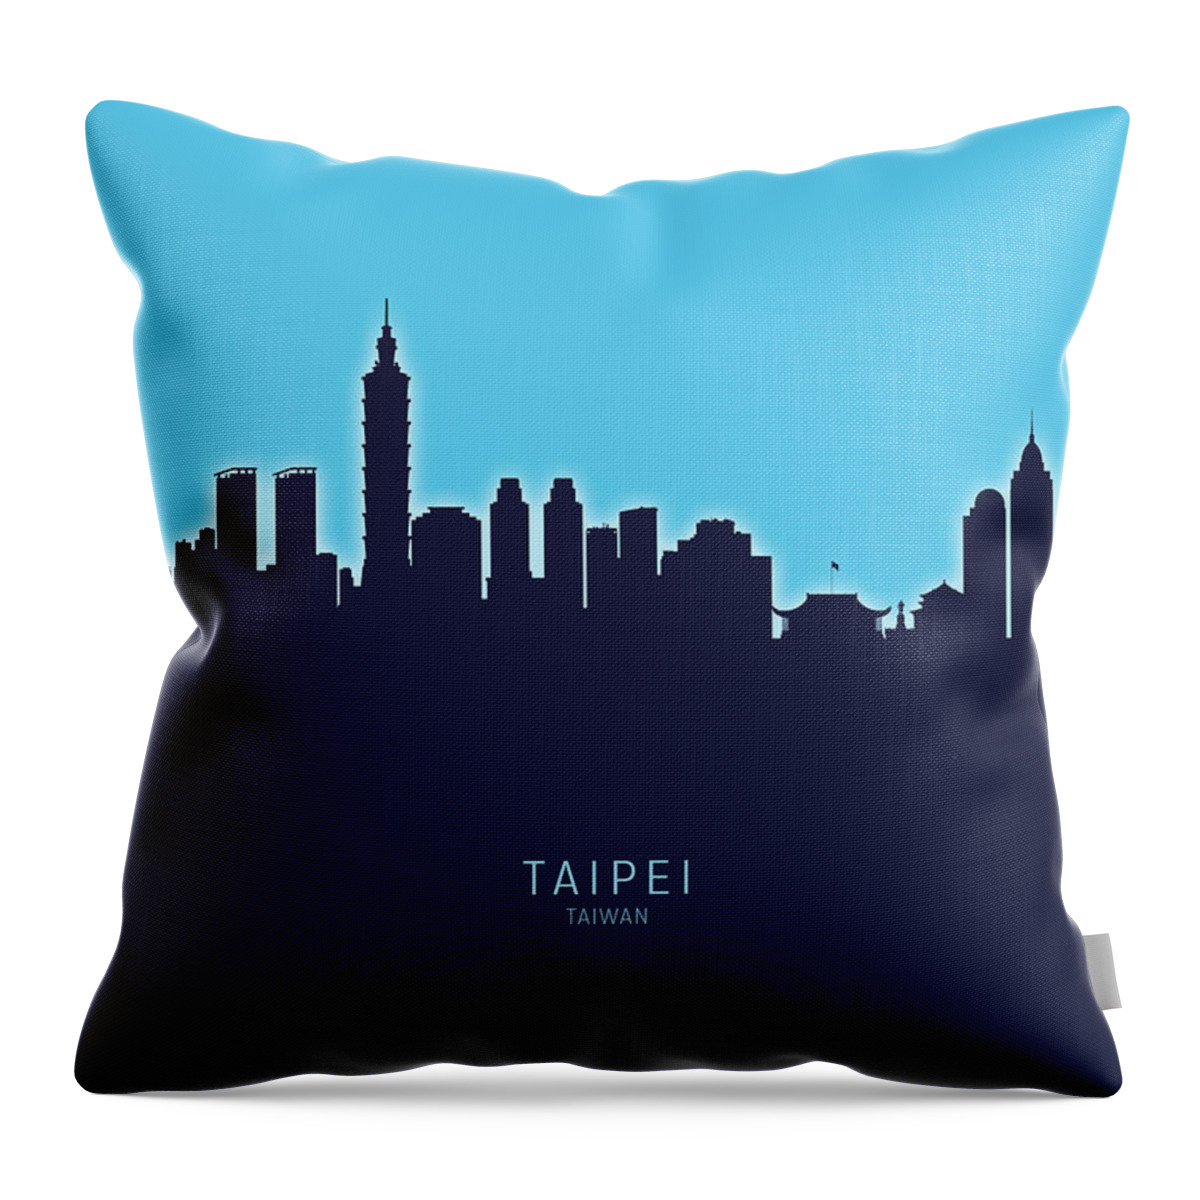 Taipei Throw Pillow featuring the digital art Taipei Taiwan Skyline #26 by Michael Tompsett